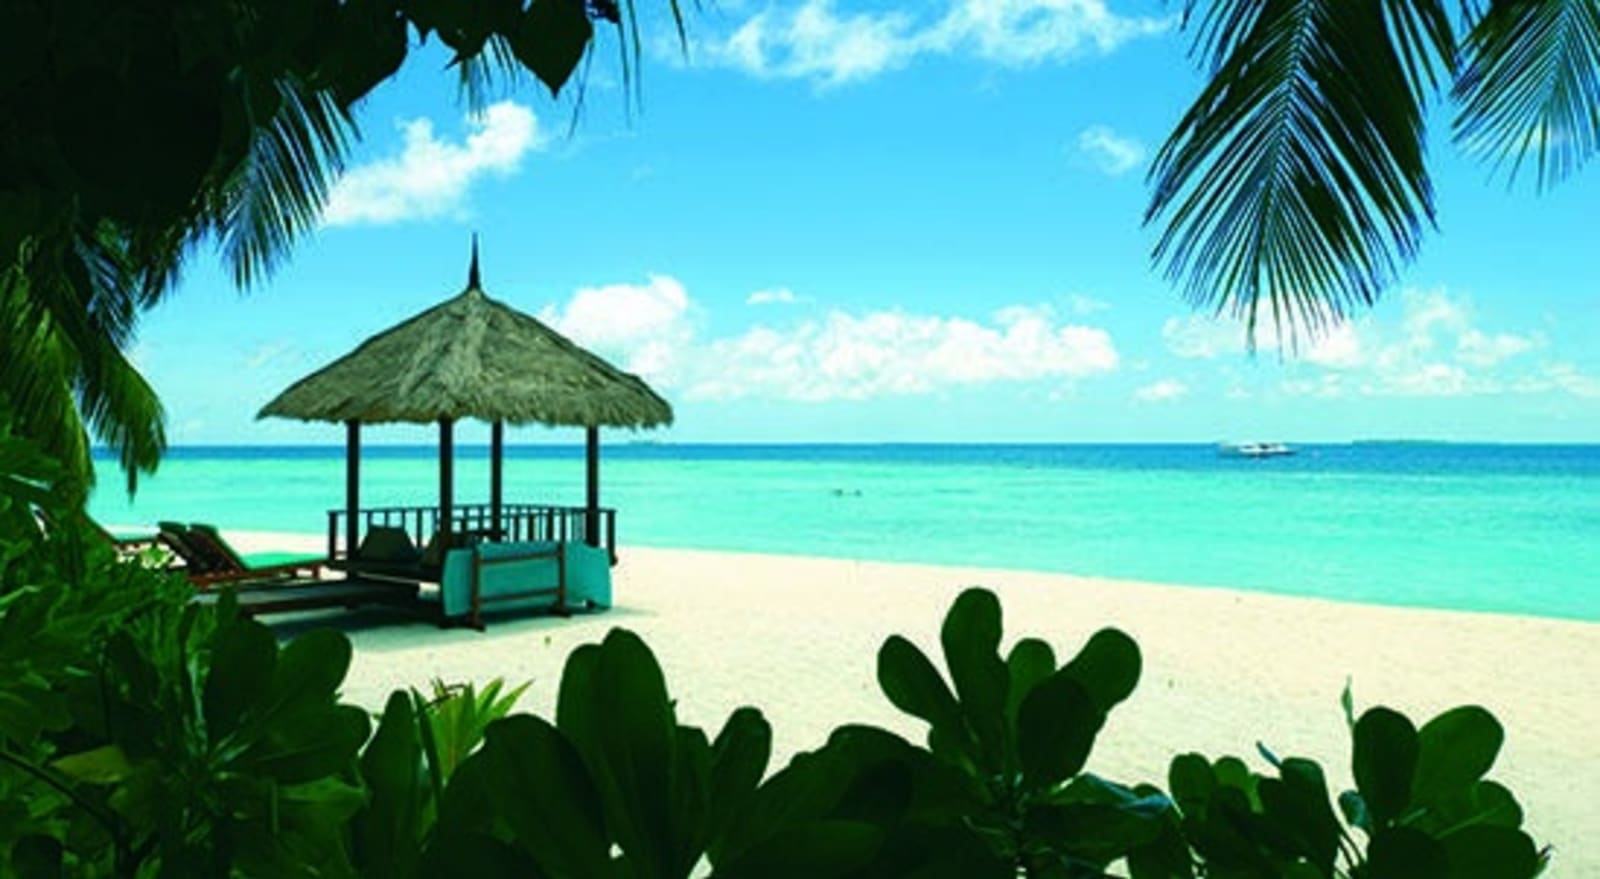 7a-maldives-seascape.jpg